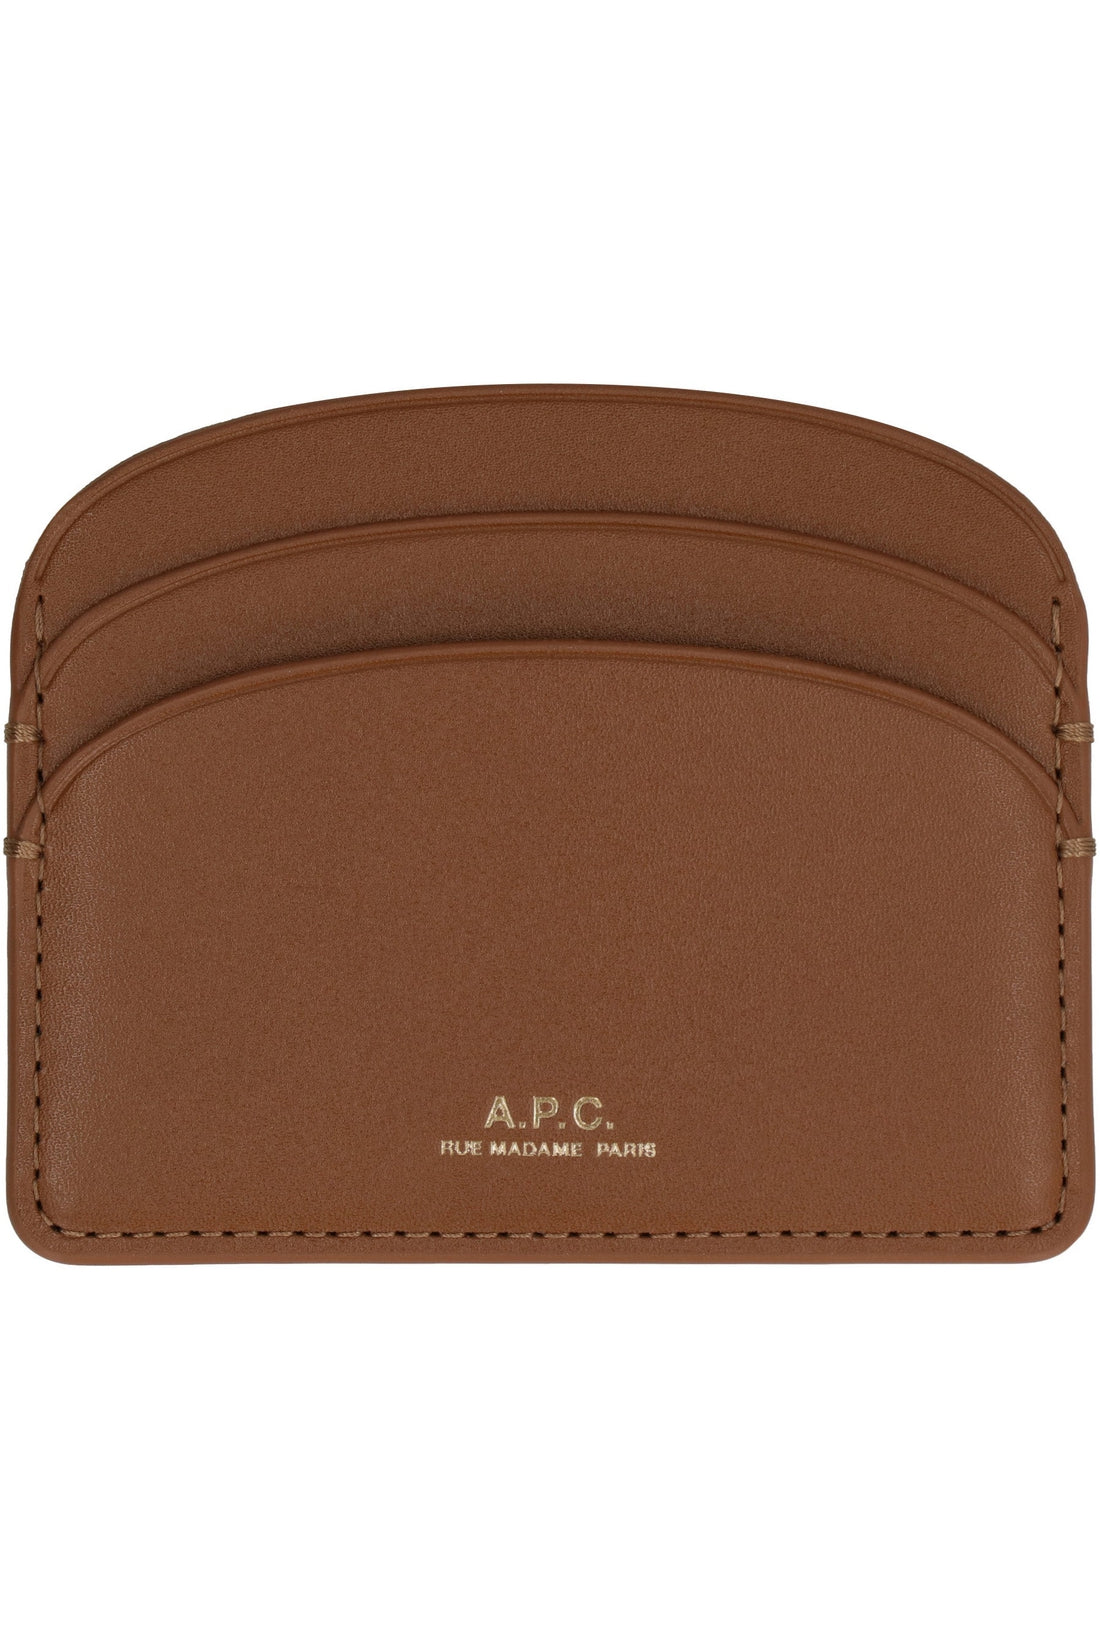 A.P.C.-OUTLET-SALE-Demi Lune leather card holder-ARCHIVIST